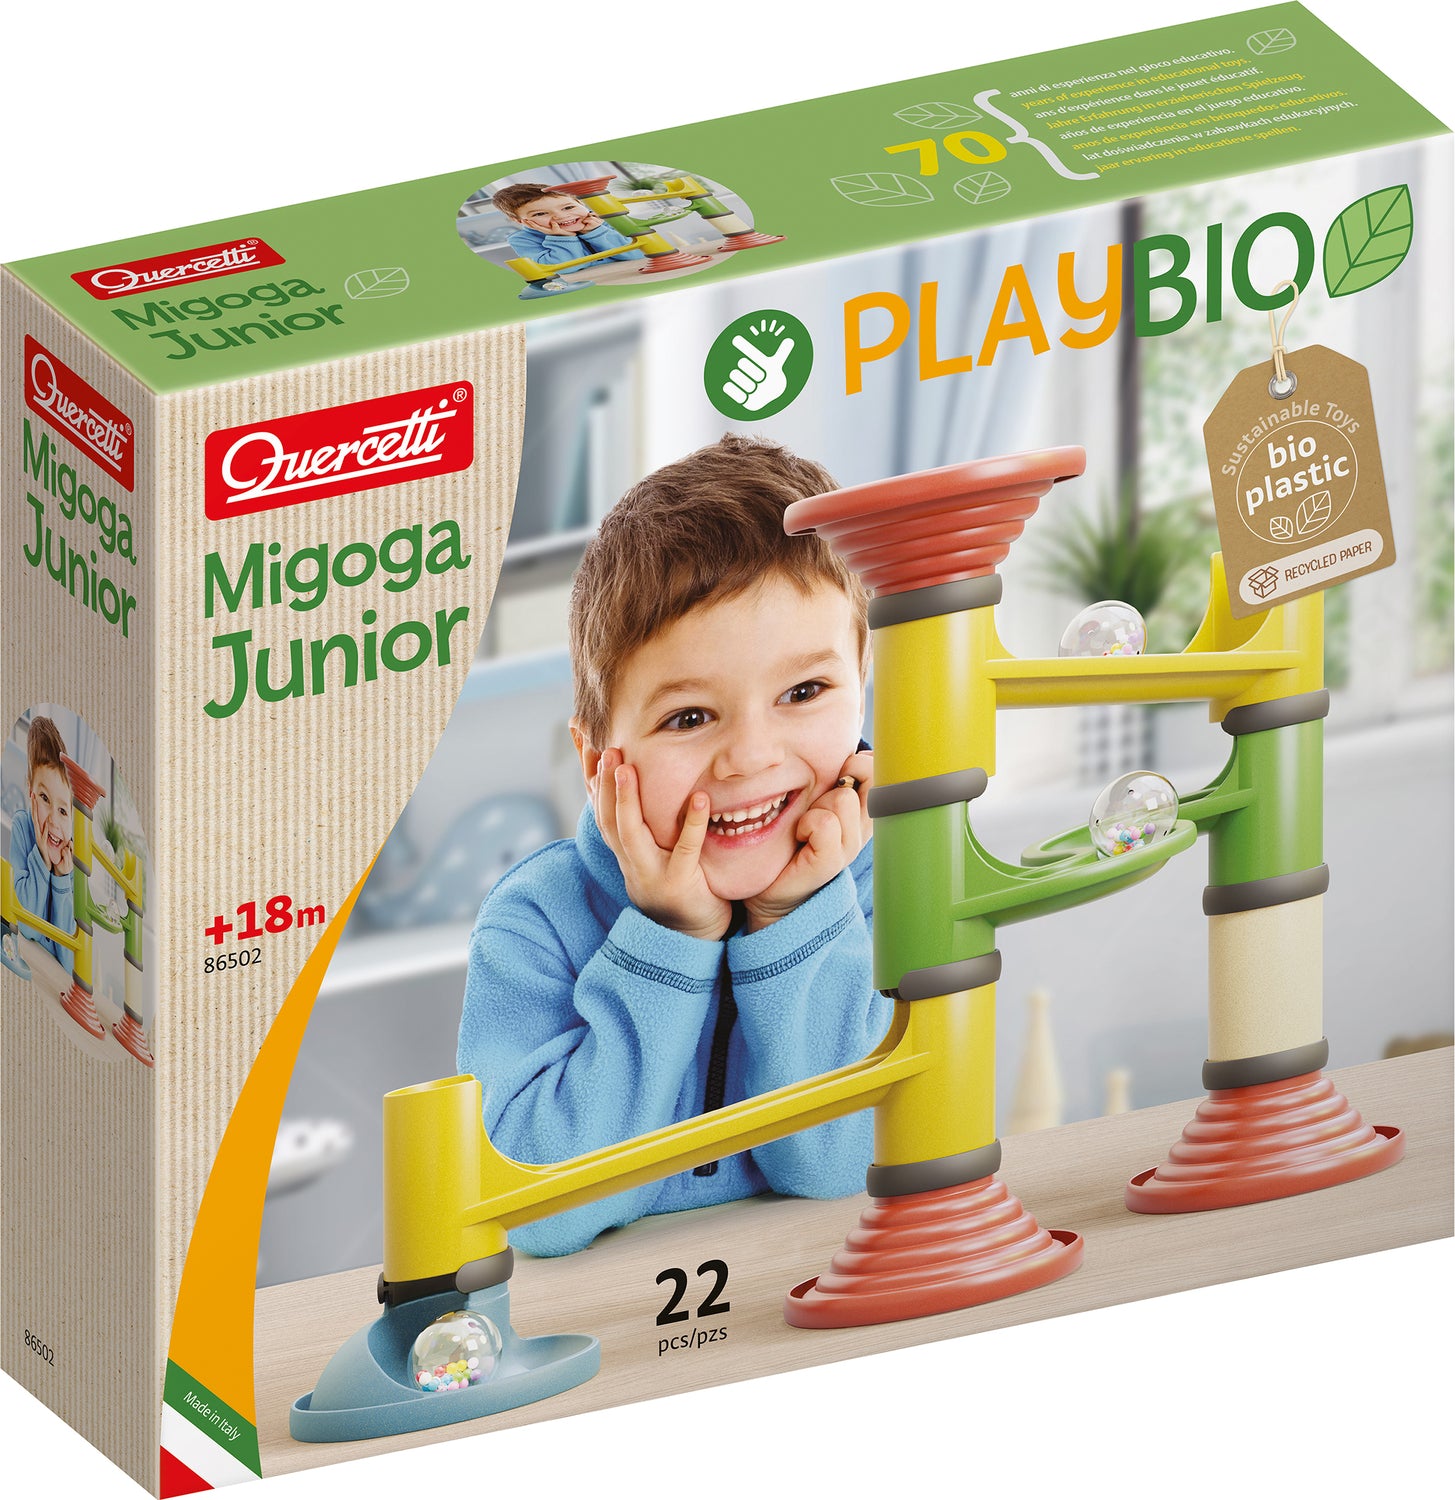 Migoga Junior Marble Run PlayBIO - 22 pcs